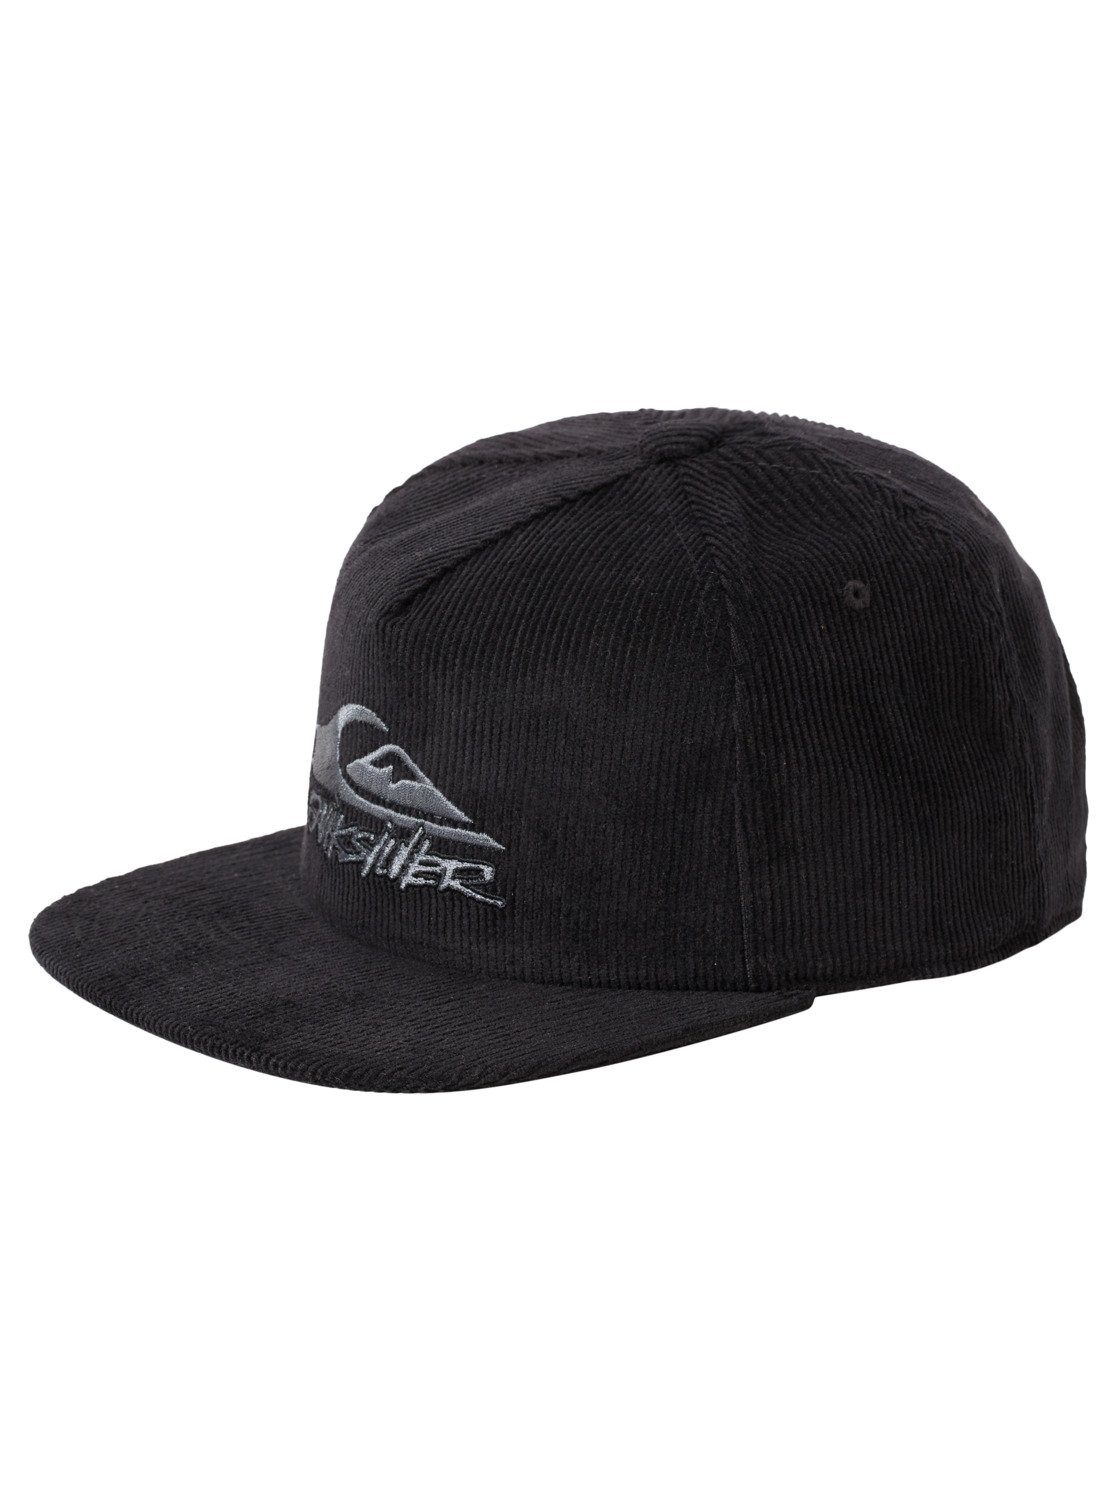 Quiksilver Snapback Black Cap Paloma